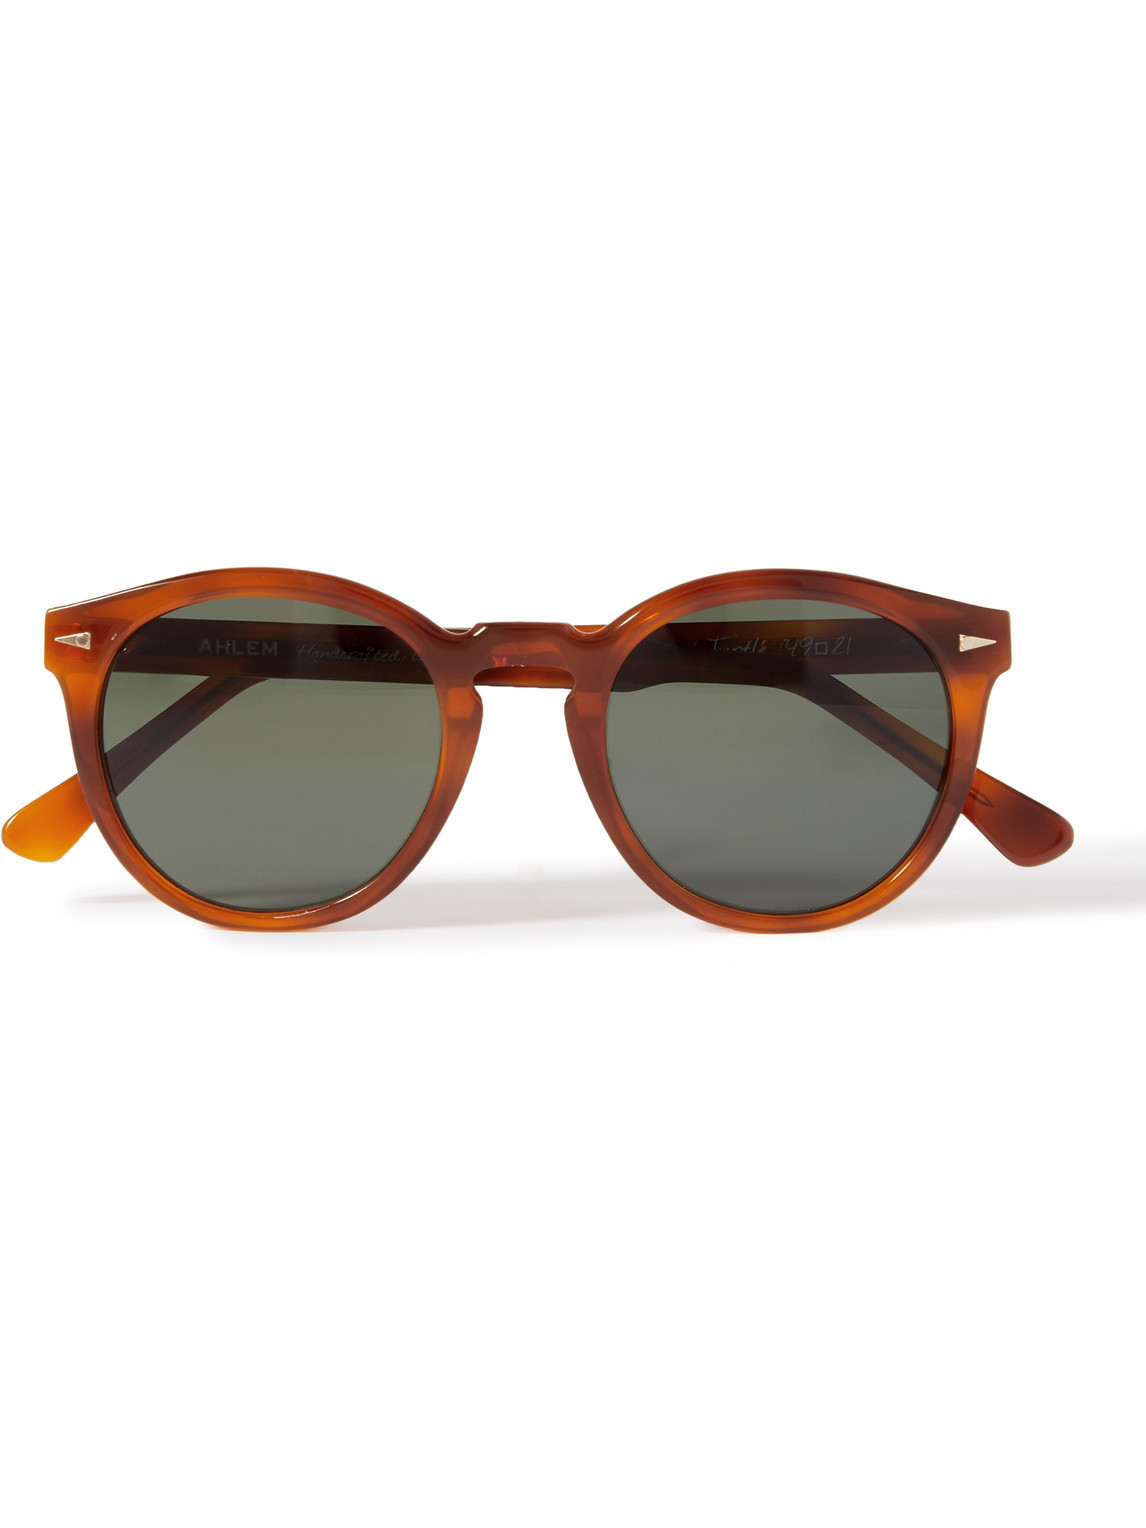 Ahlem St Germain Round-frame Tortoiseshell Acetate Sunglasses In Orange